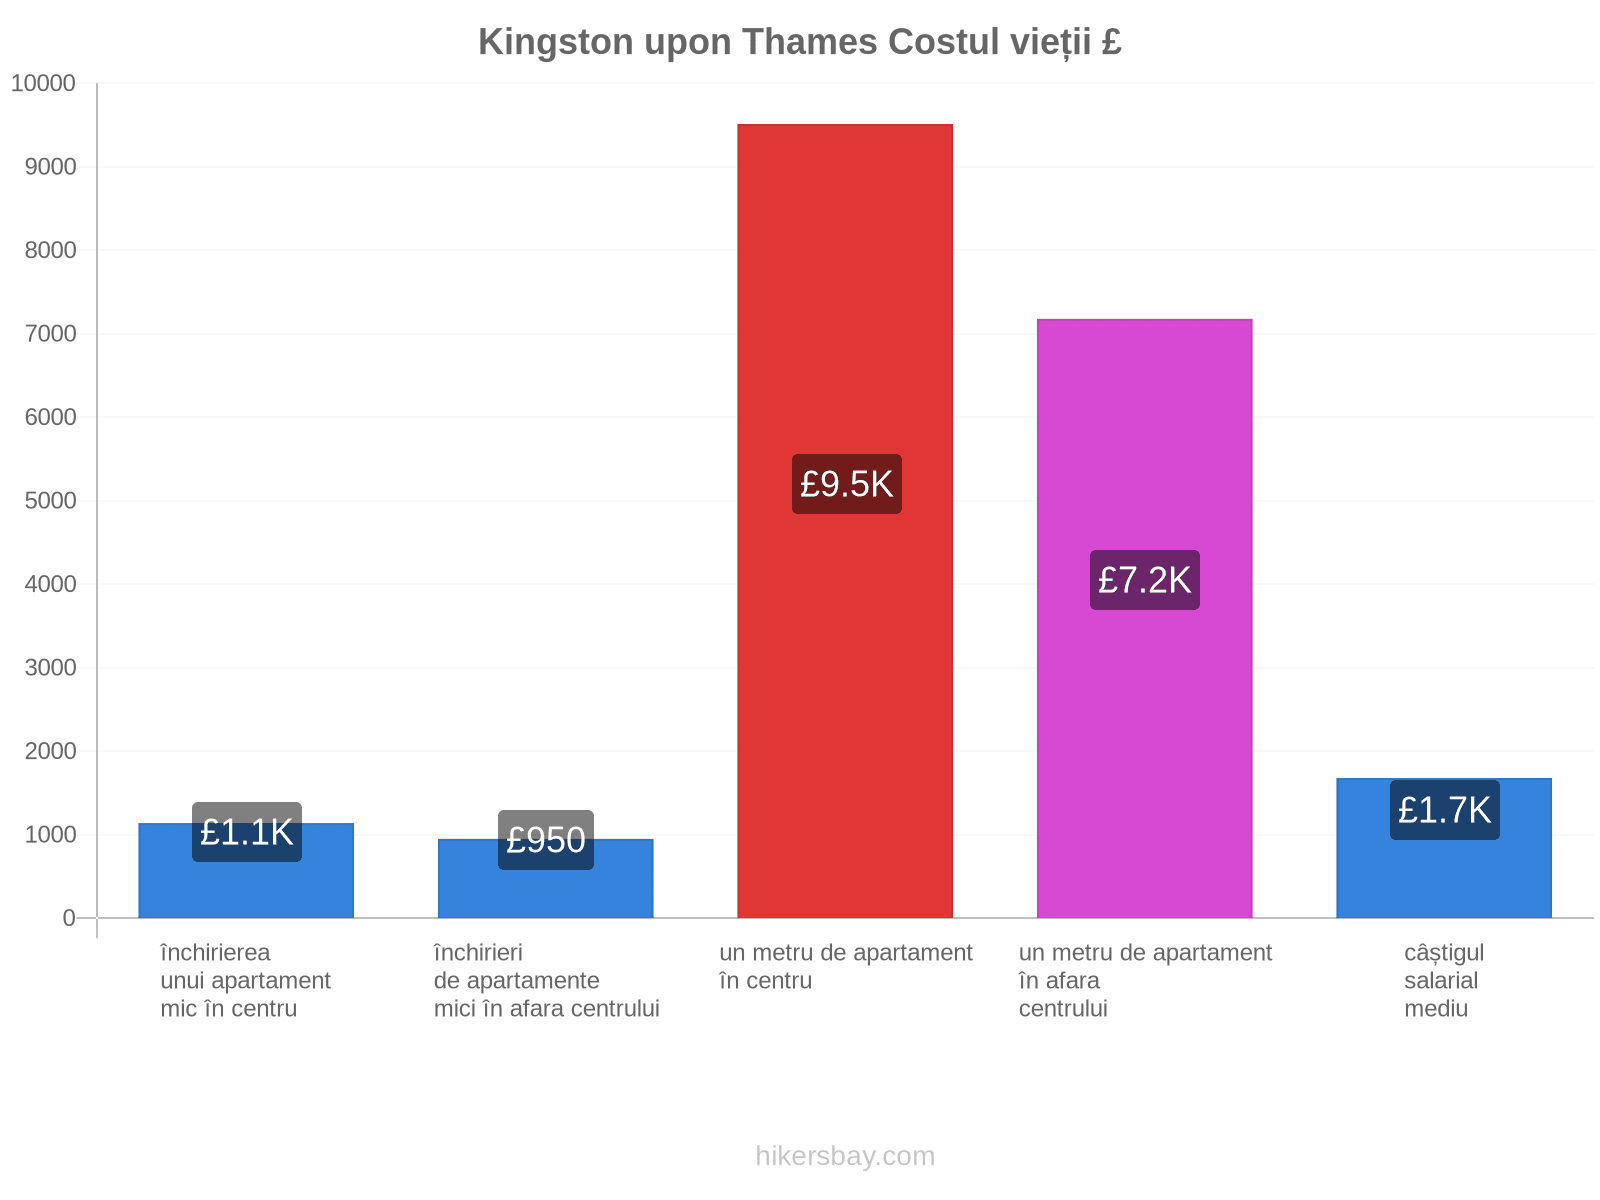 Kingston upon Thames costul vieții hikersbay.com